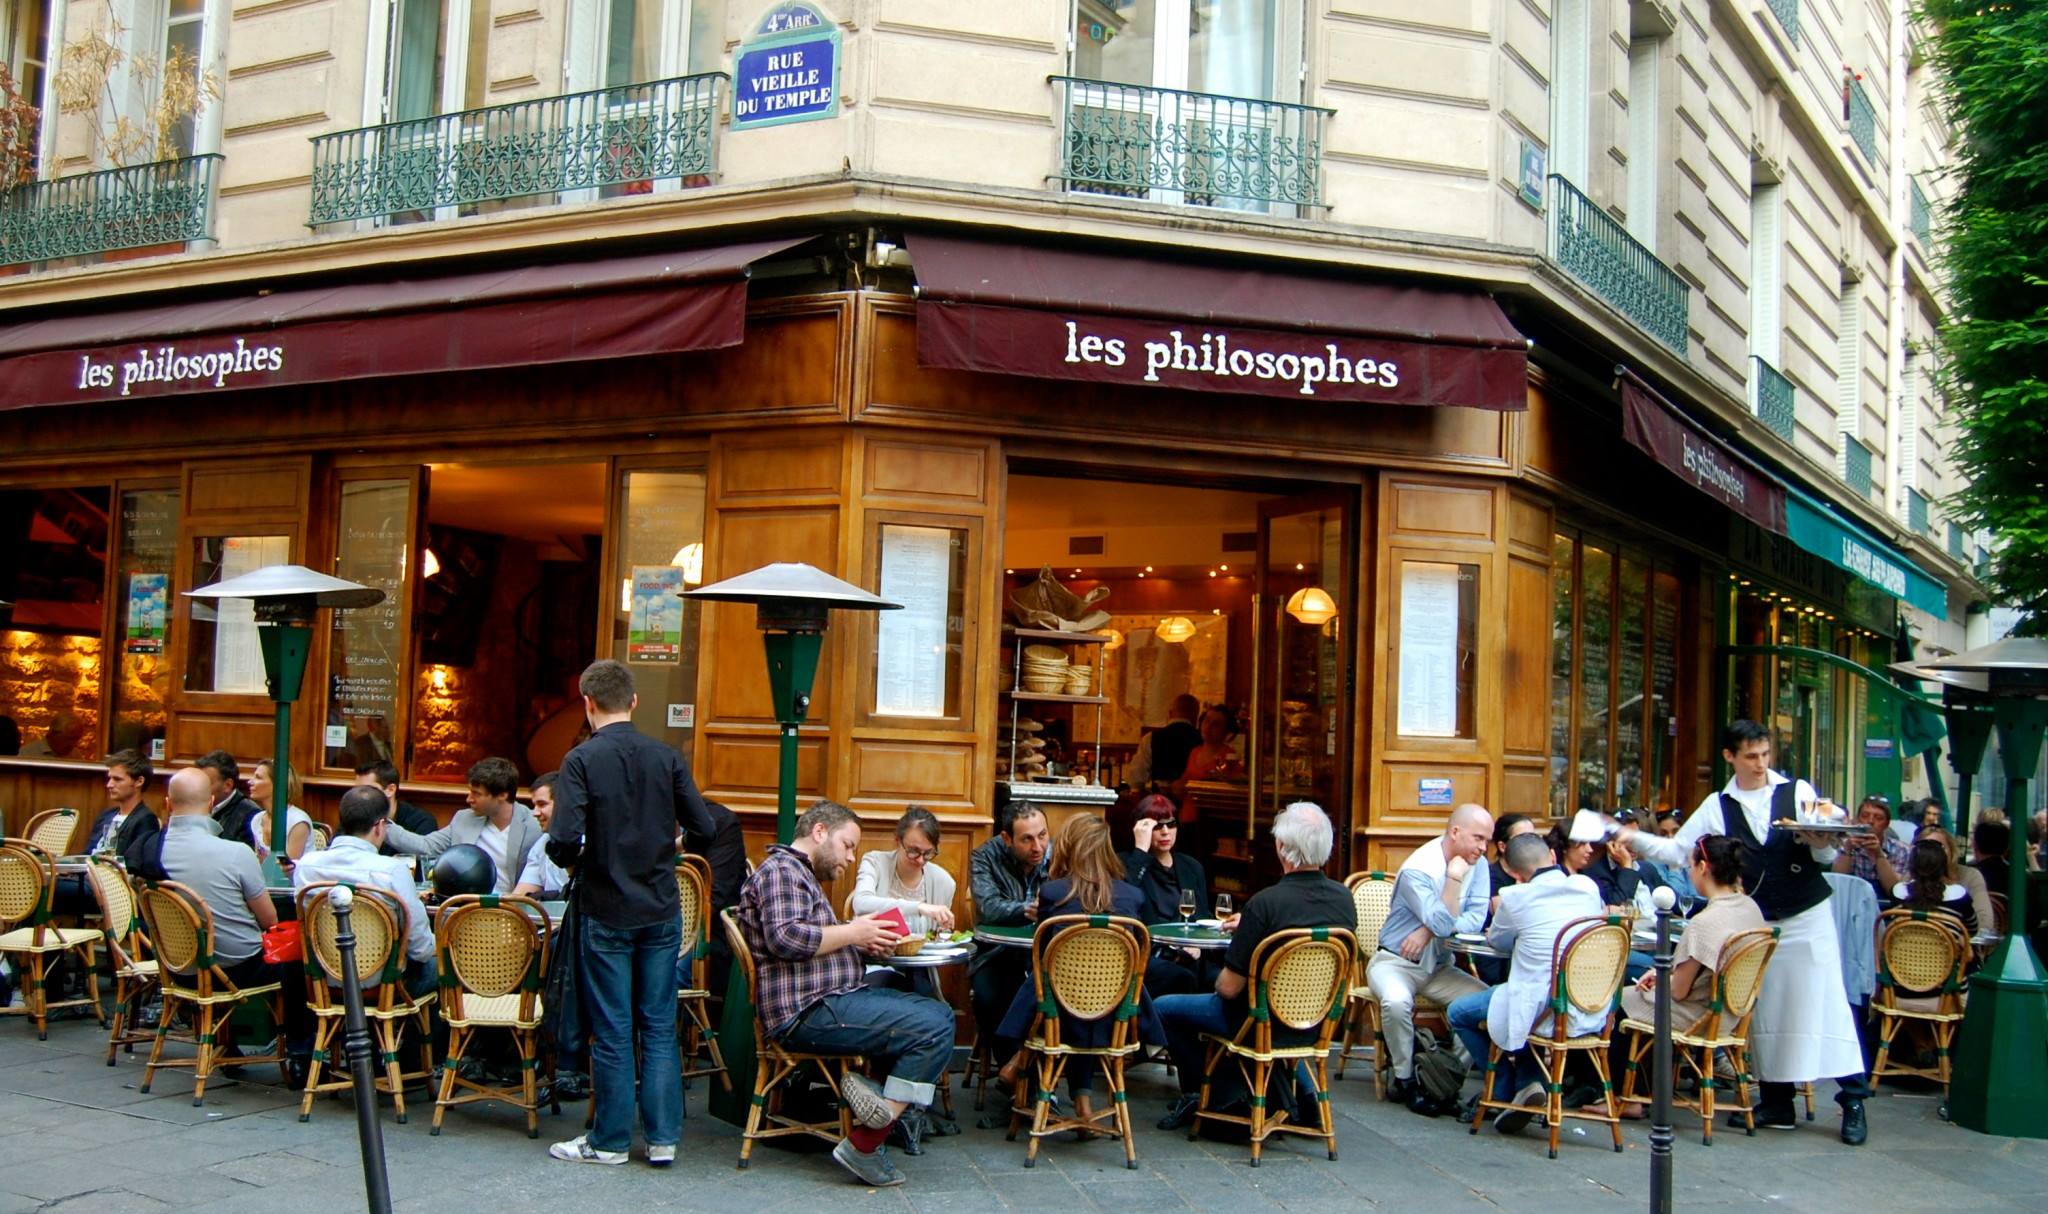 Les Philosphes cafe in the Marais, France: Photo taken by Charles Halton